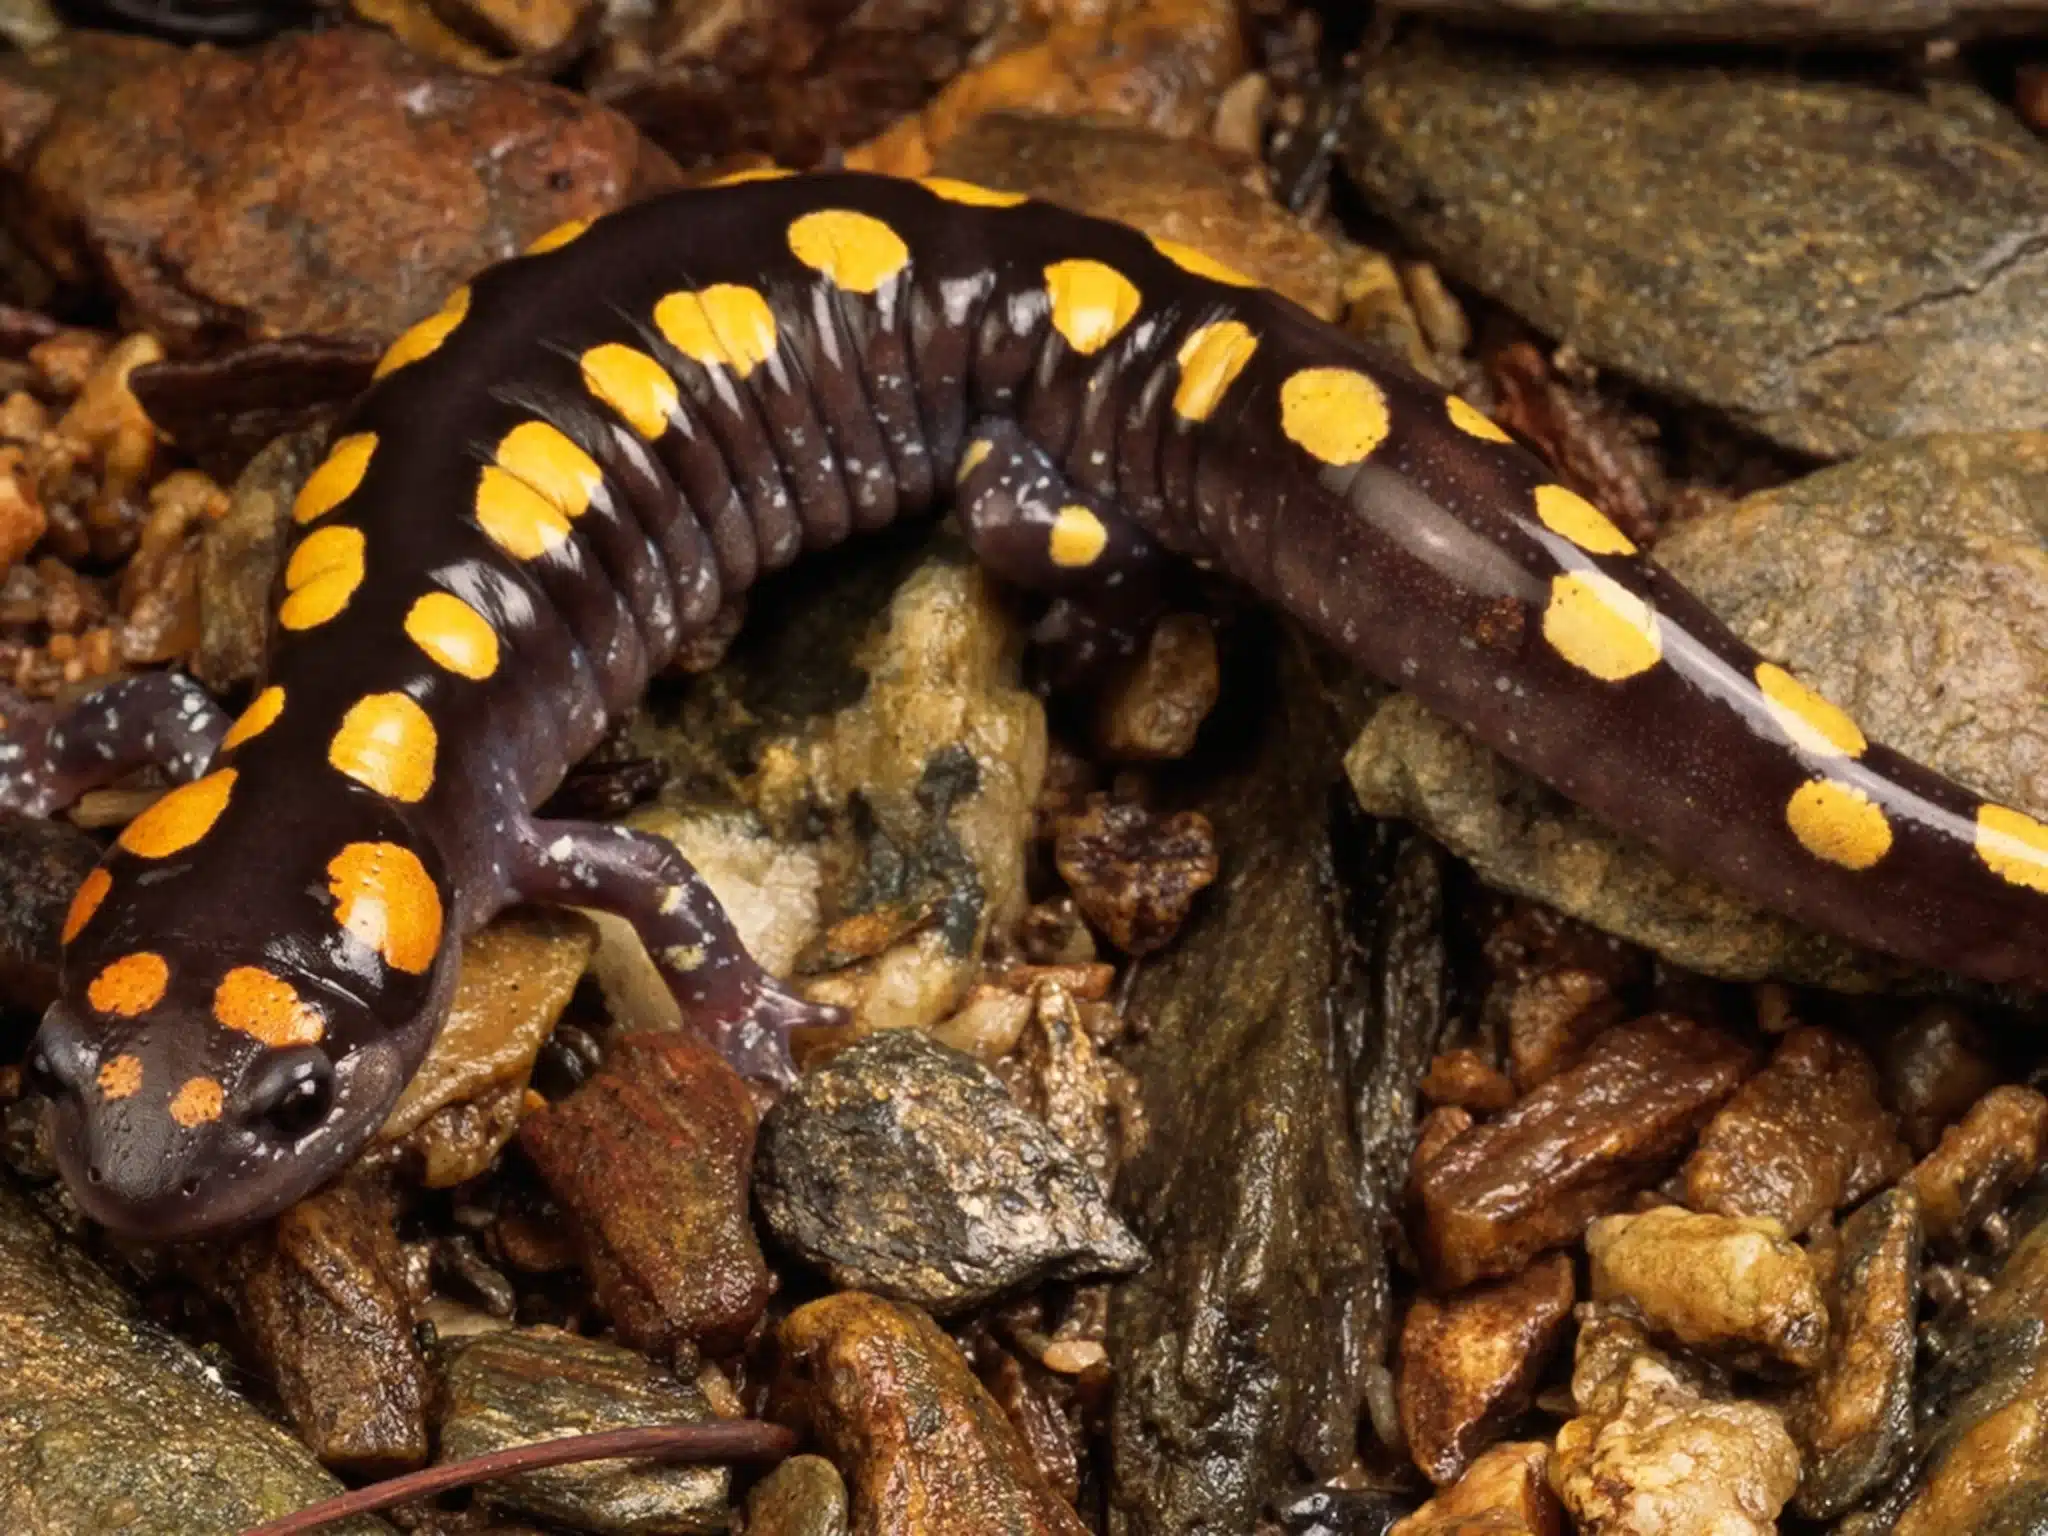 spotted-salamander-closeup_4x3.jpg